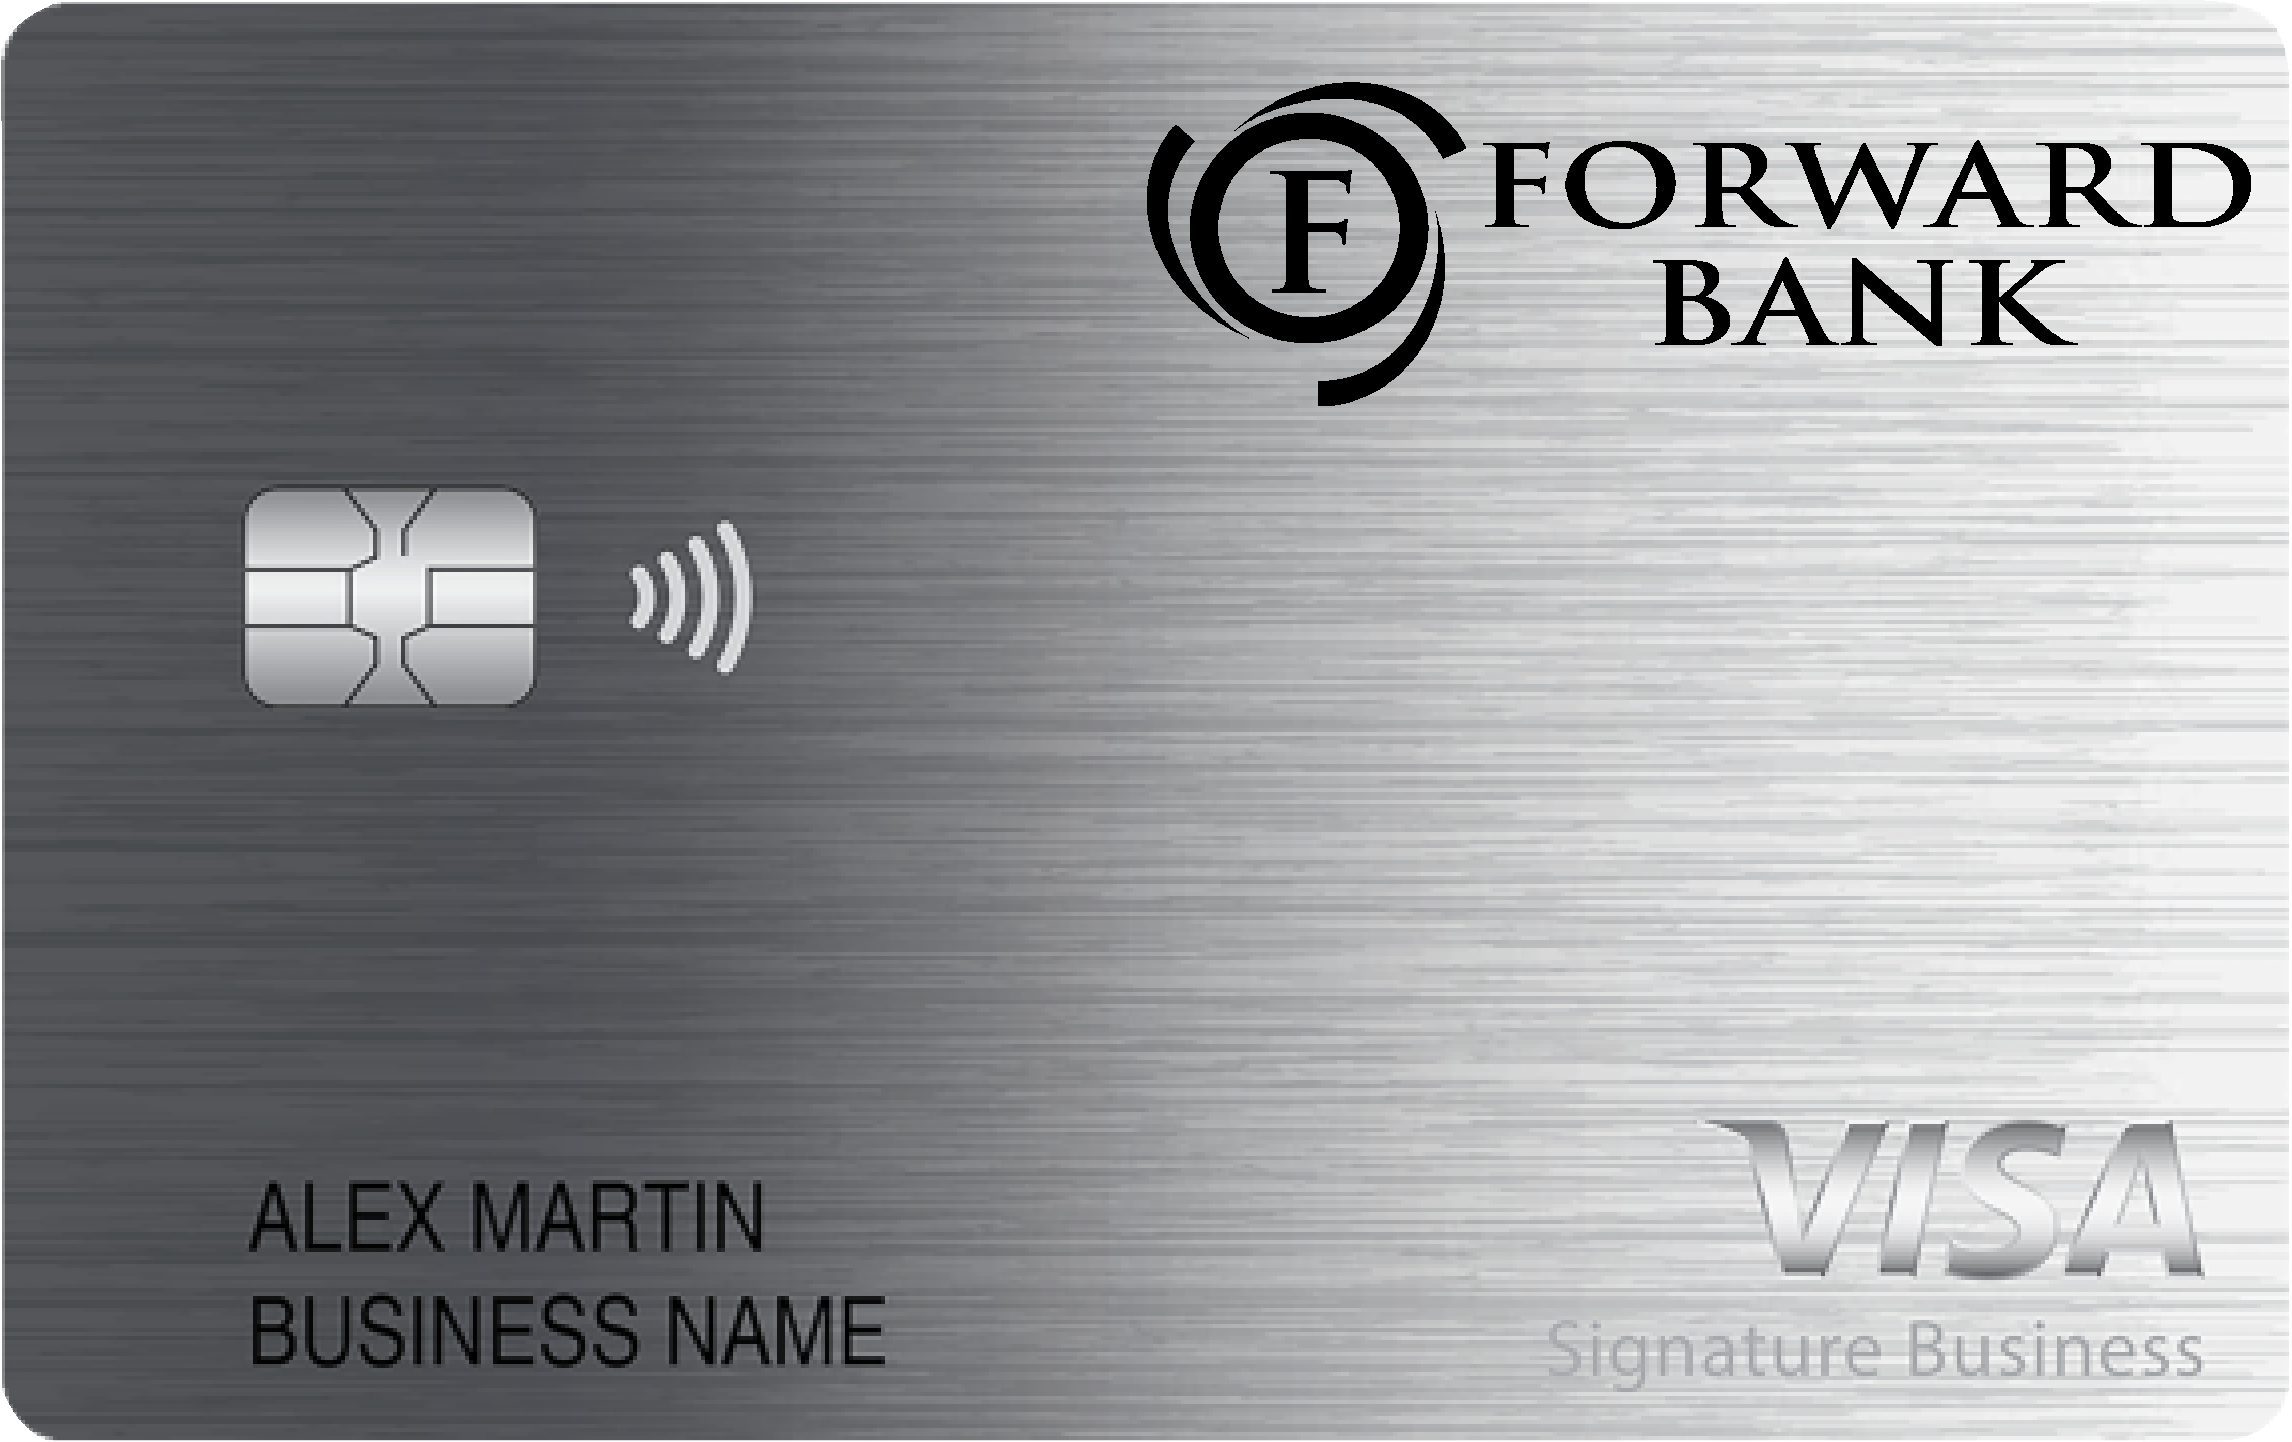 Forward Bank Smart Business Rewards Card